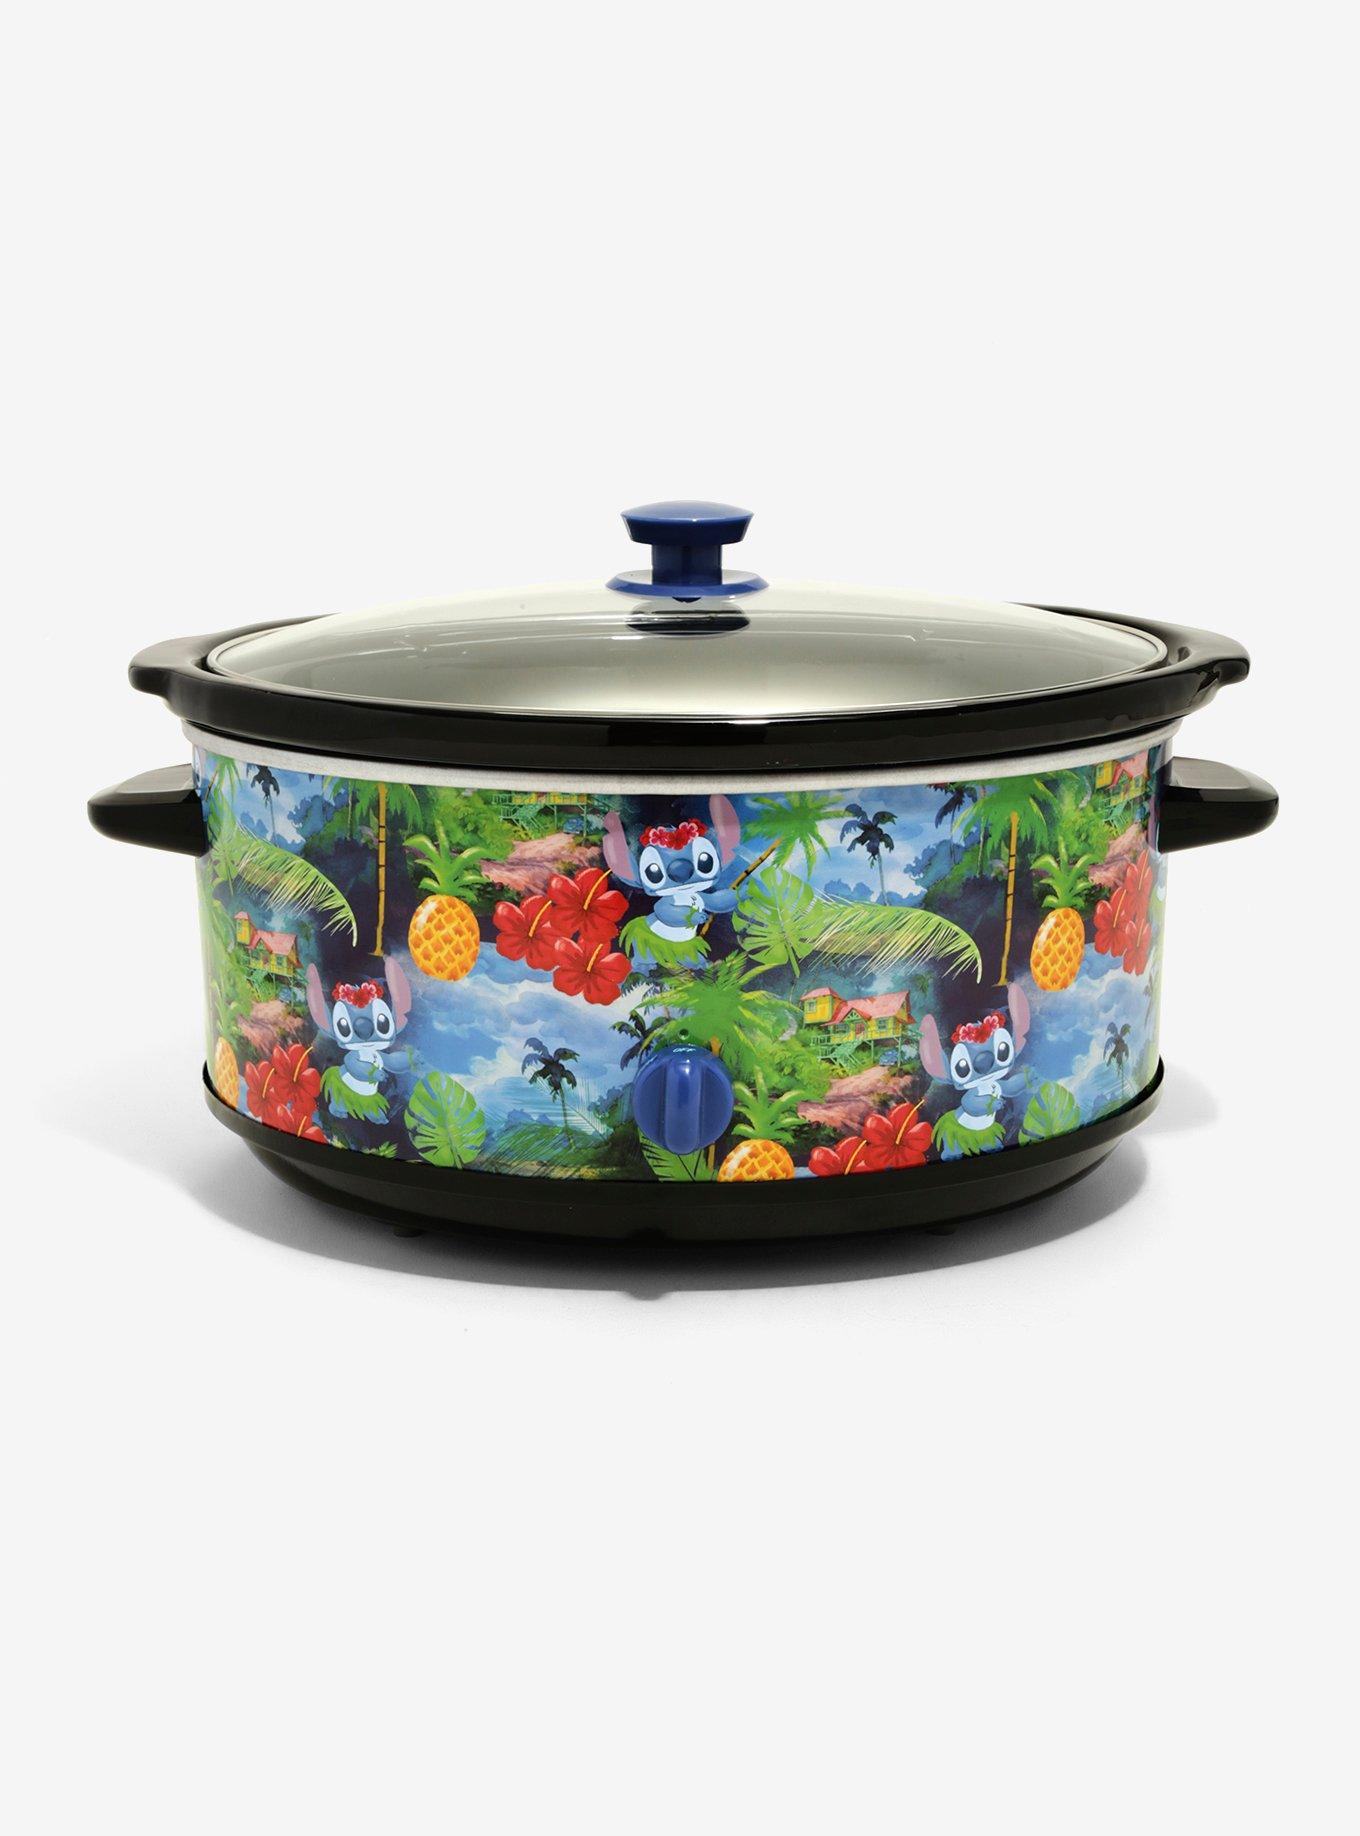 Disney, Kitchen, Lilo Stitch 7quart Slow Cooker By Disney New In Box